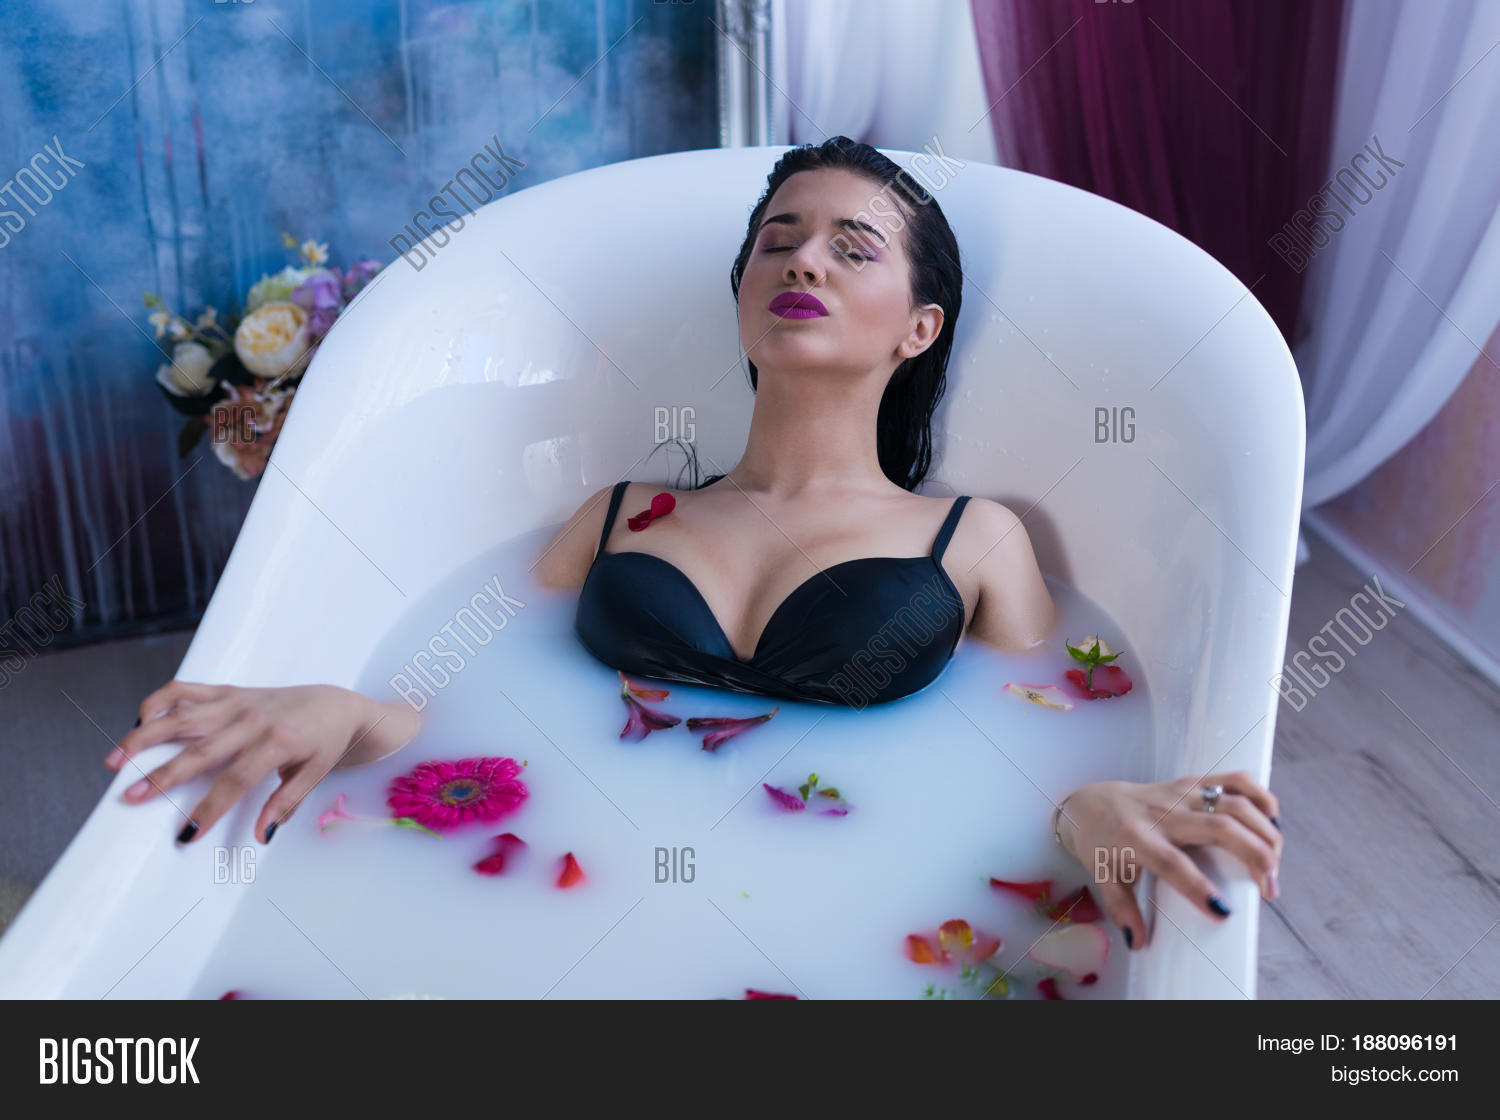 deva persaud recommends Hot Chicks In Bath